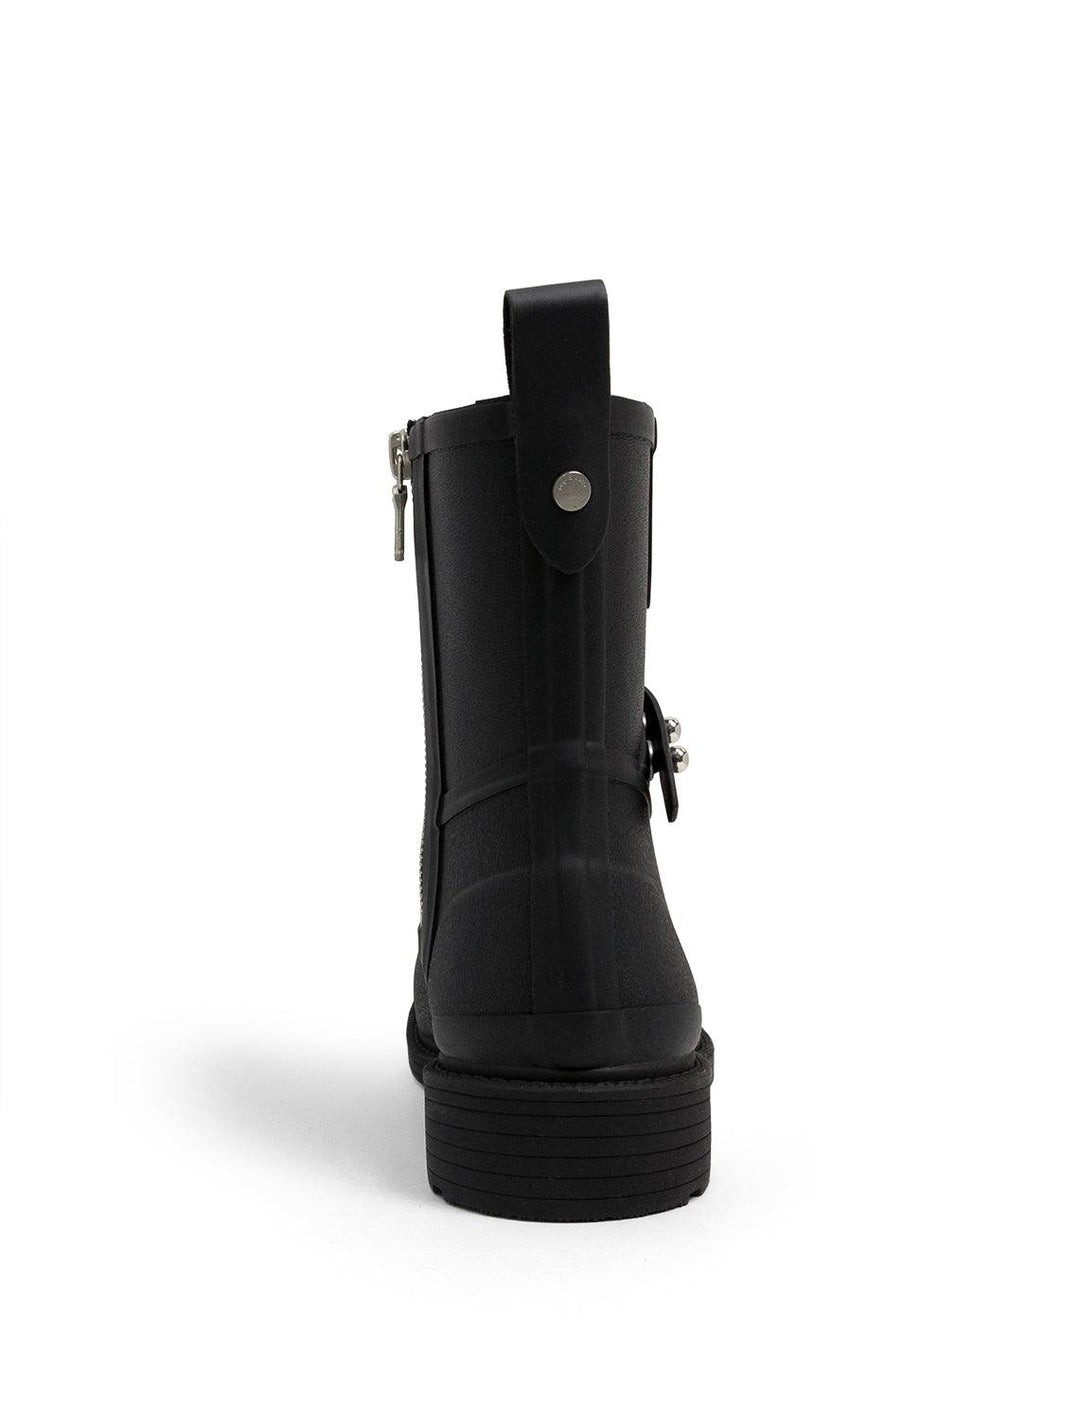 moto rain boot in black (3)